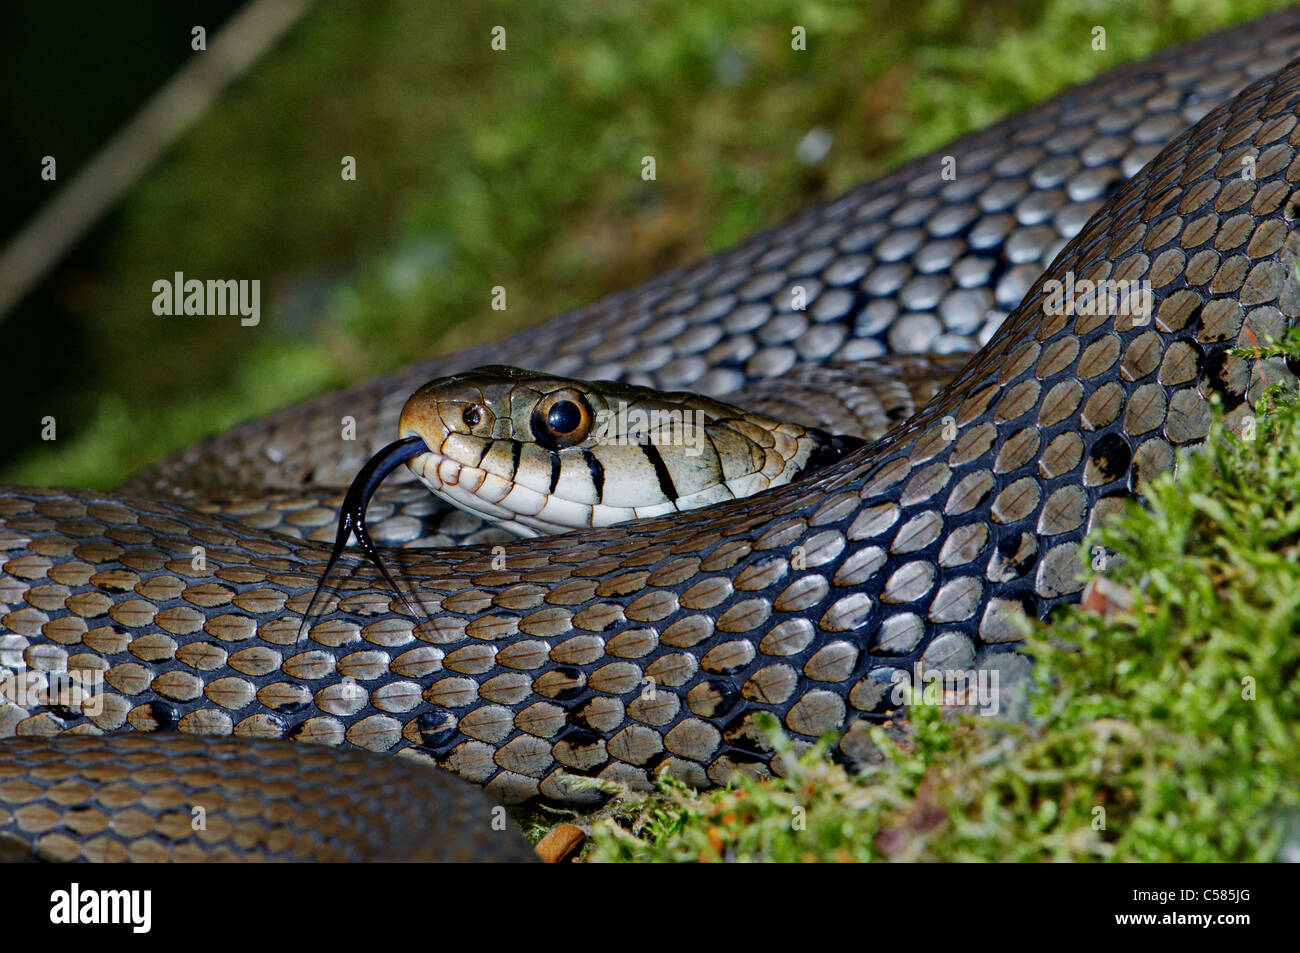 Grass snake, colubrid, colubrids, Natrix natrix helvetica, snake, snakes, reptile, reptiles, portrait, protected, endangered, in Stock Photo